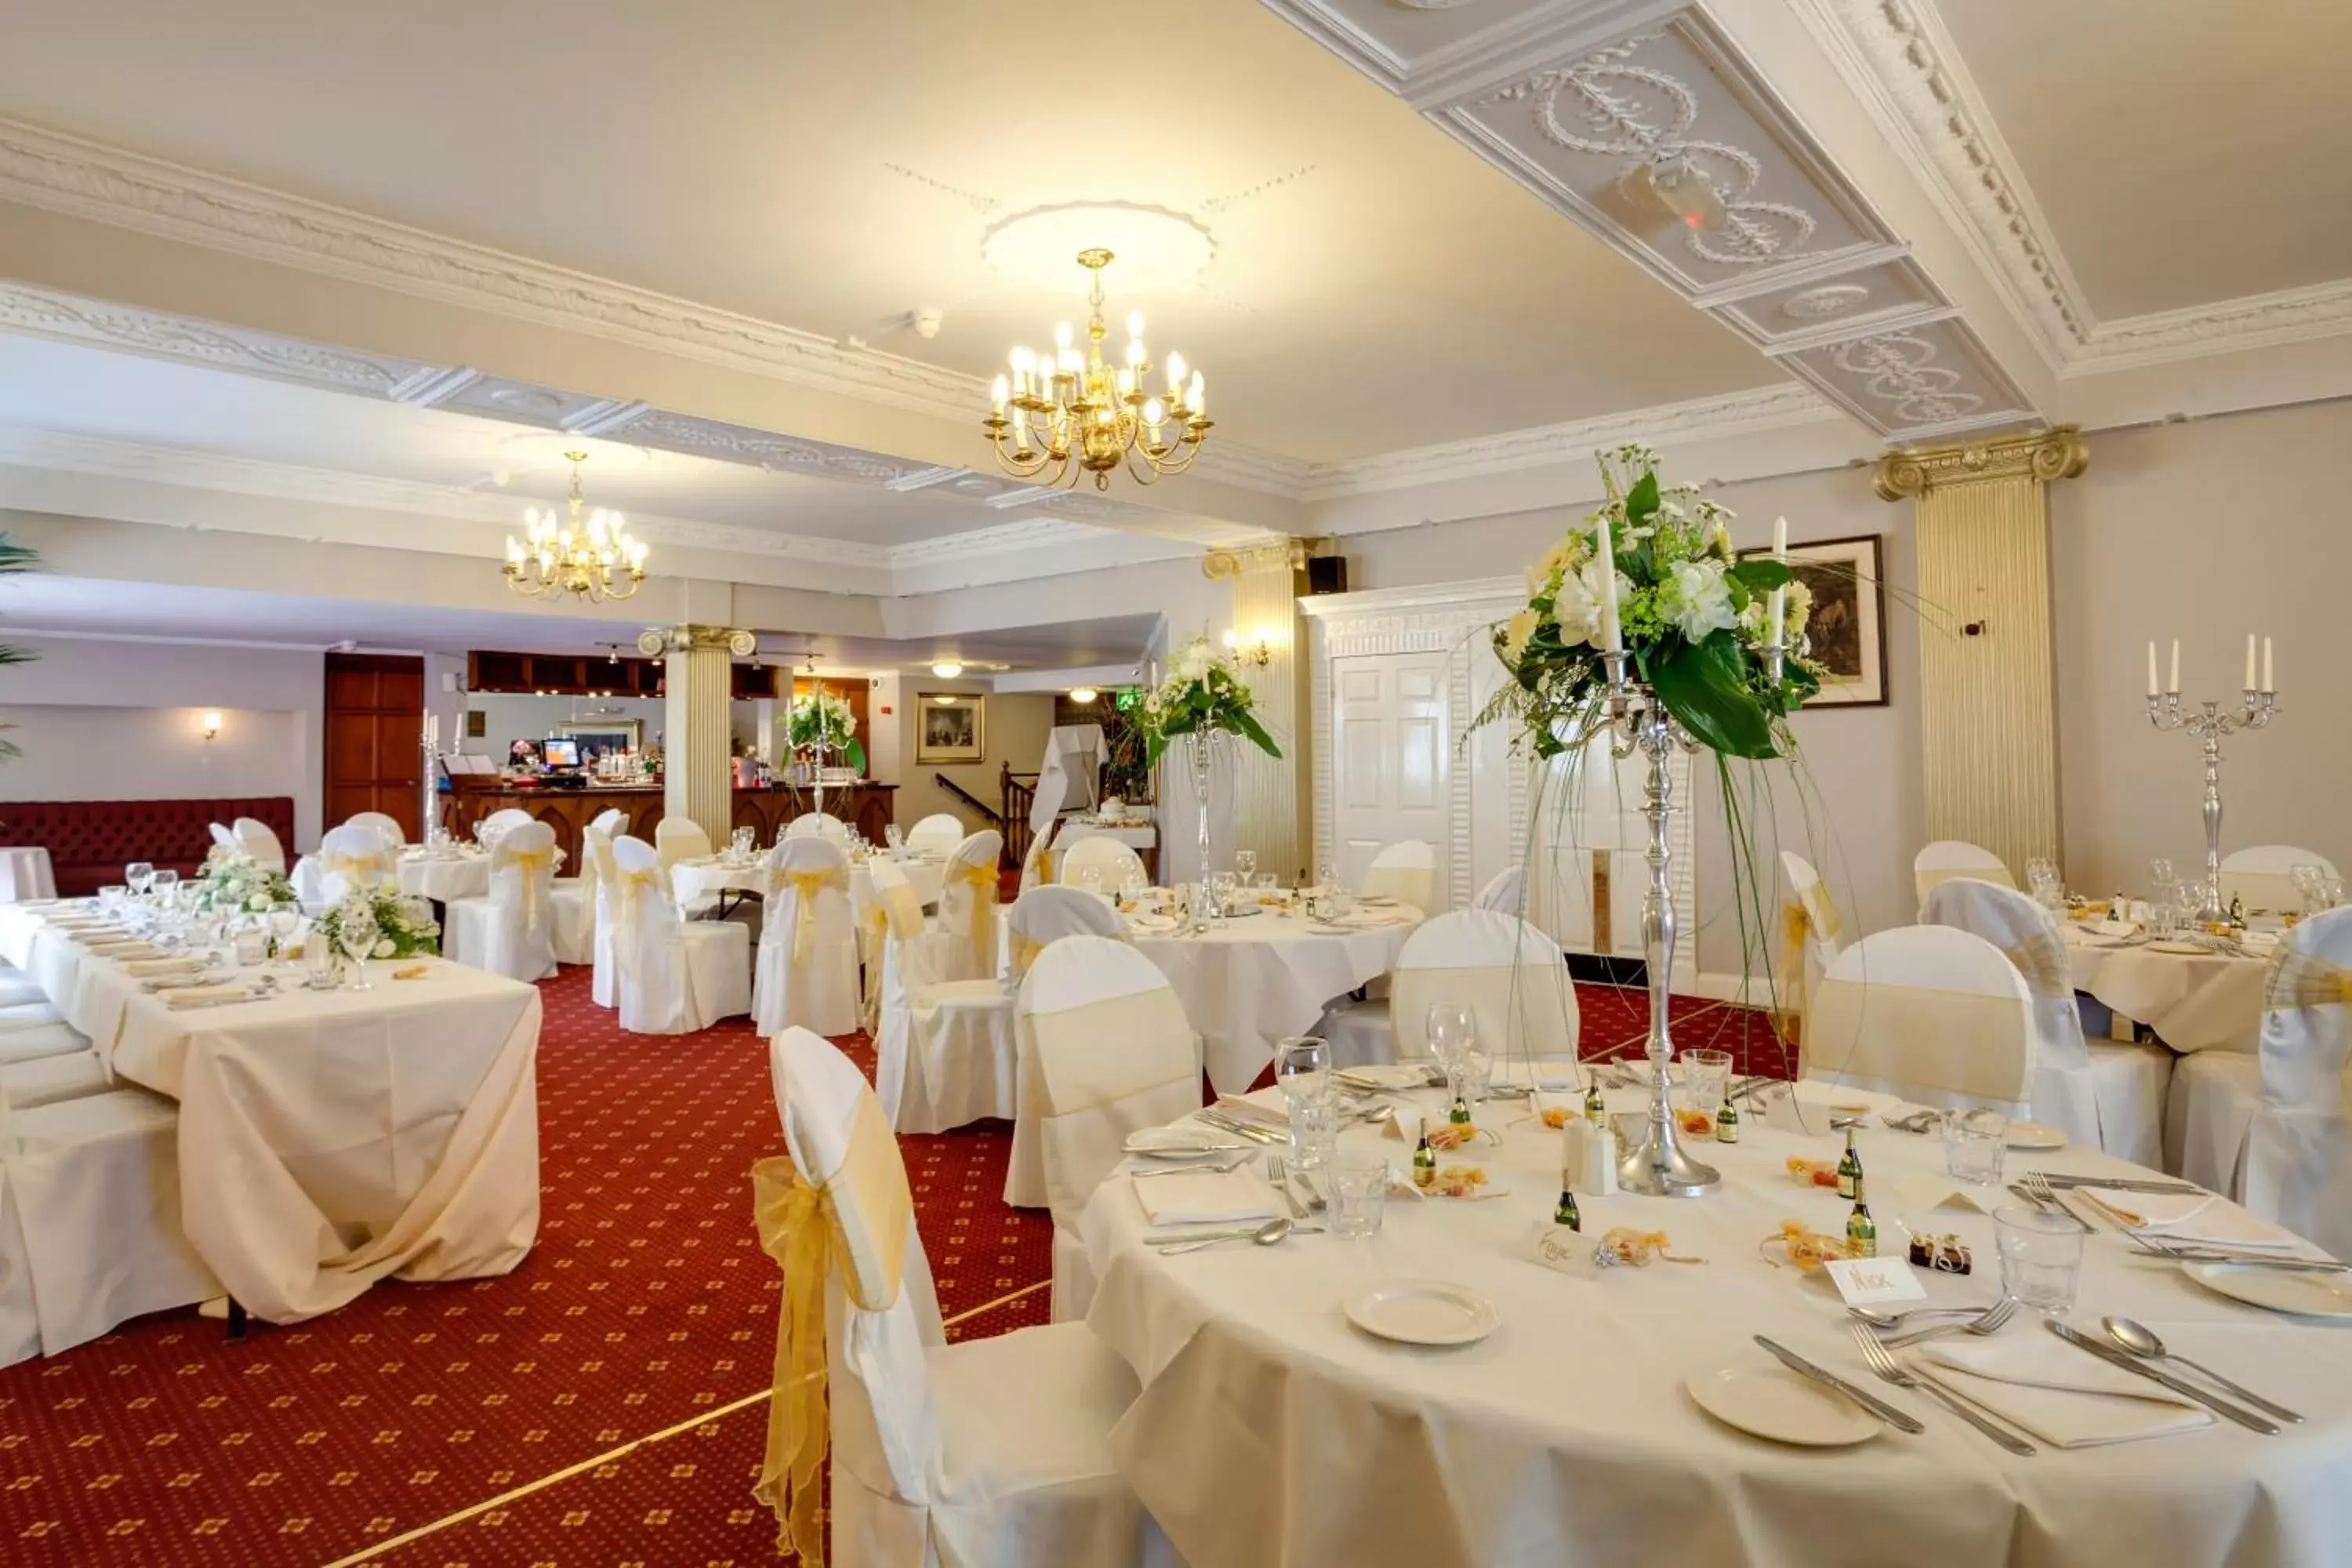 Banquet/Function facilities, Banquet Facilities in The Saracens Head Hotel